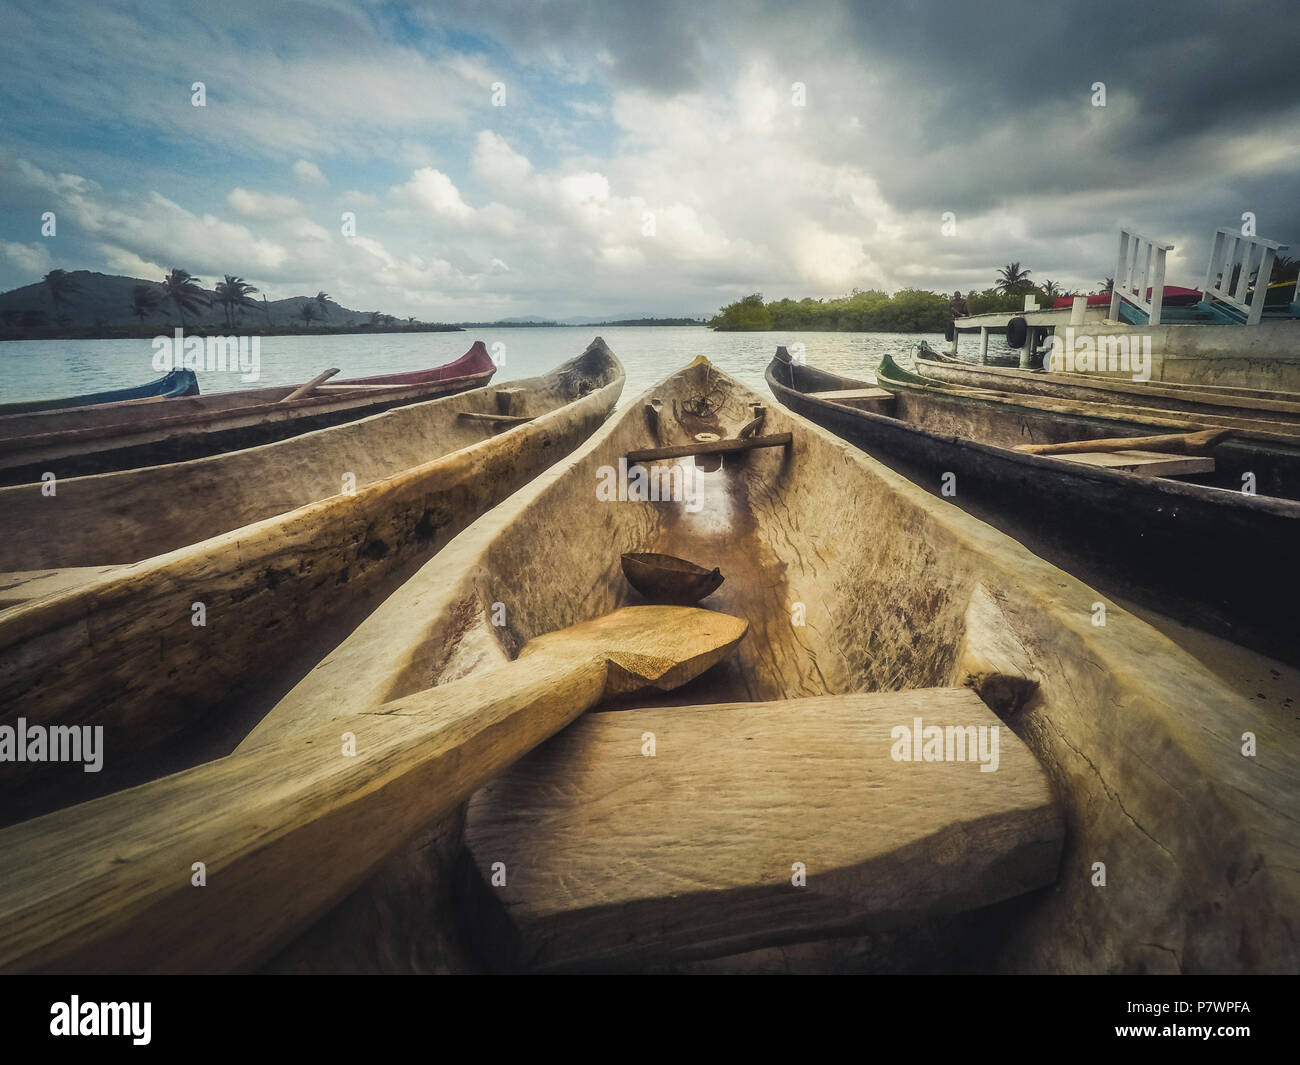 wooden canoe boats, traditional wood boat closeup Stock Photo